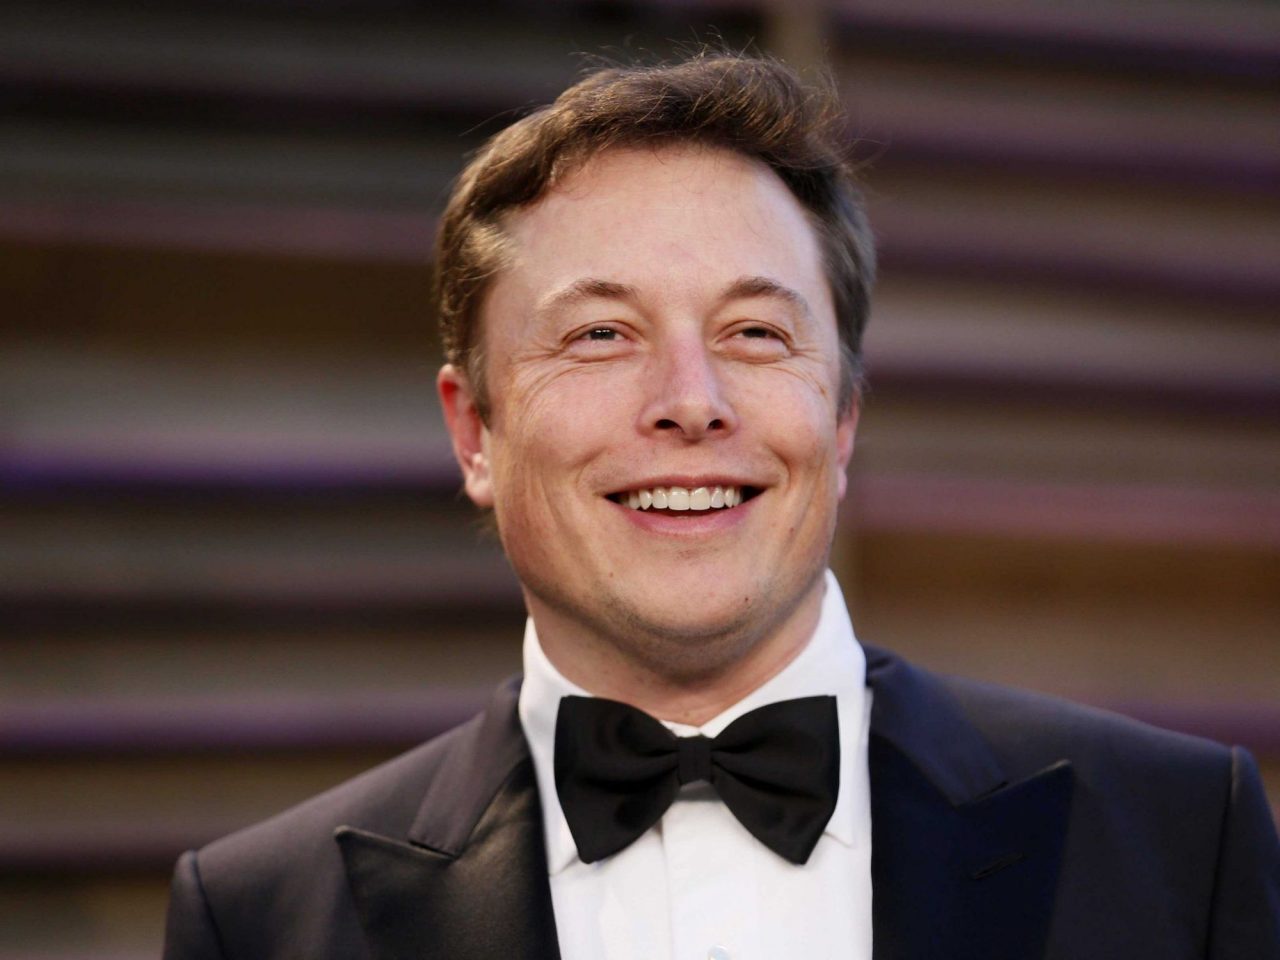 Elon Musk: Πώς κέρδισε 36 δισ. δολάρια σε μία ημέρα - Ένα τρισ. δολάρια η αξία της Tesla